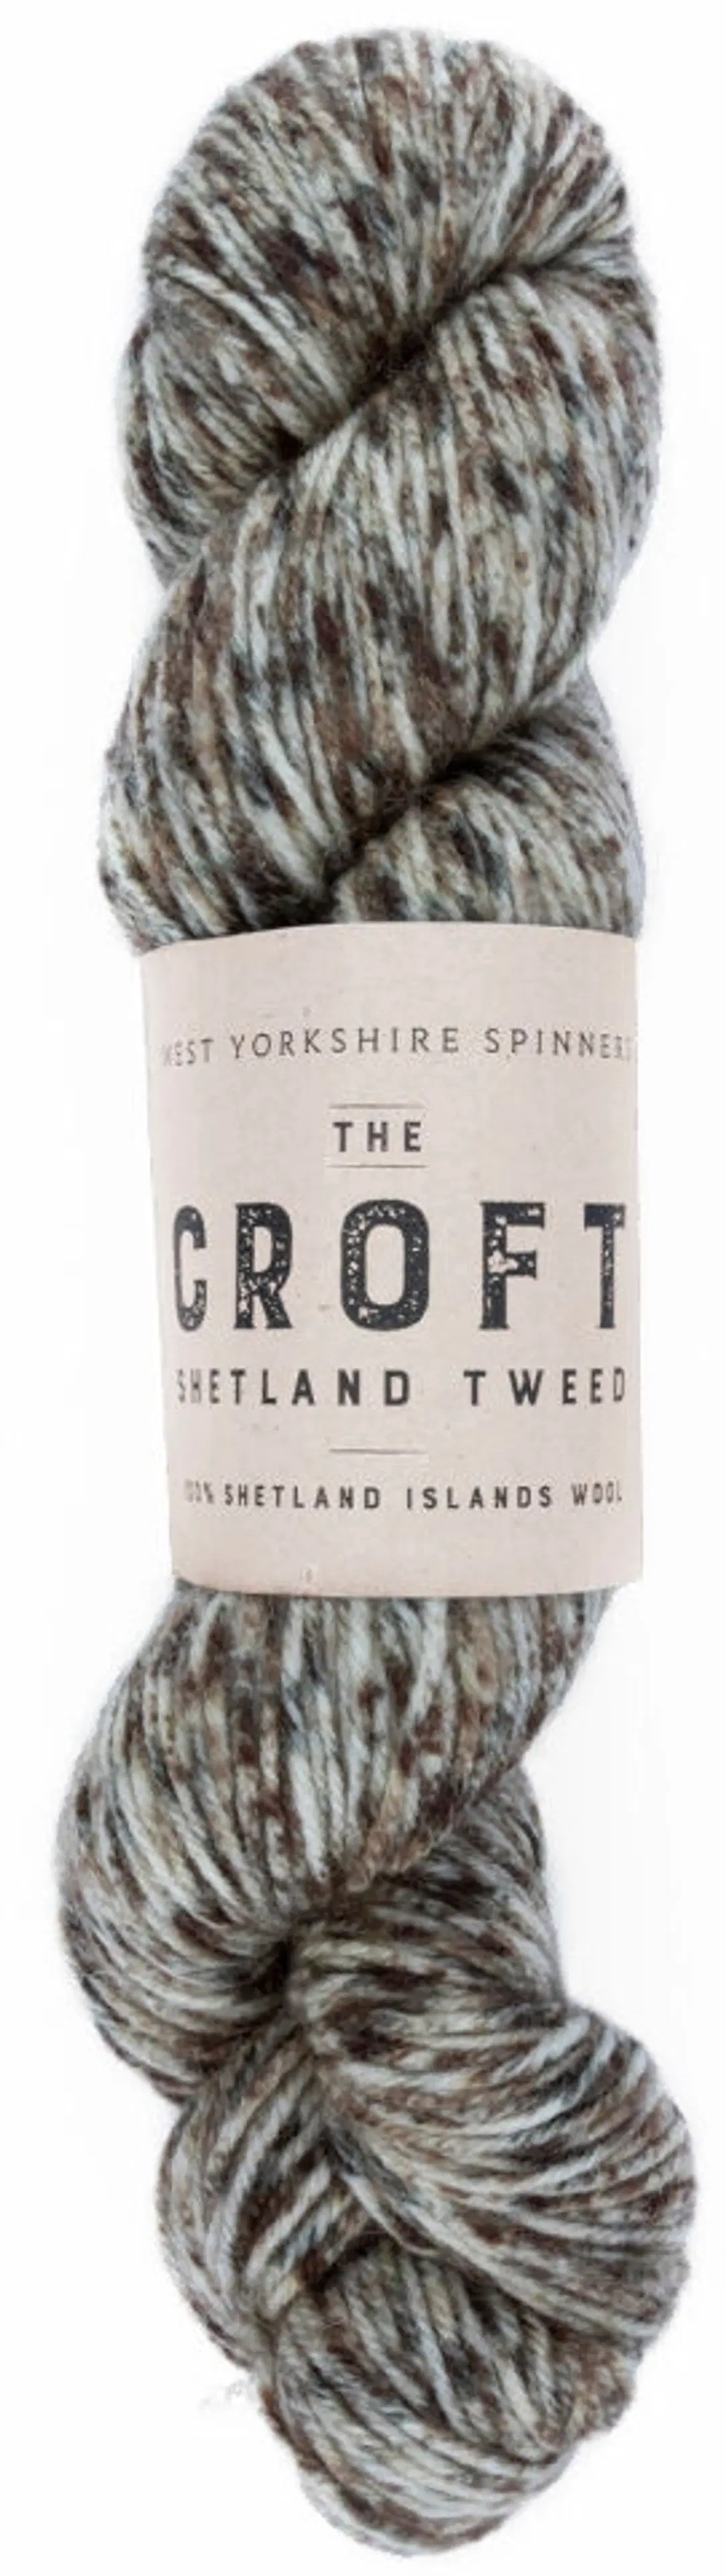 West Yorkshire Spinners lanka The Croft Shetland Tweed DK 100g Burrastow 812